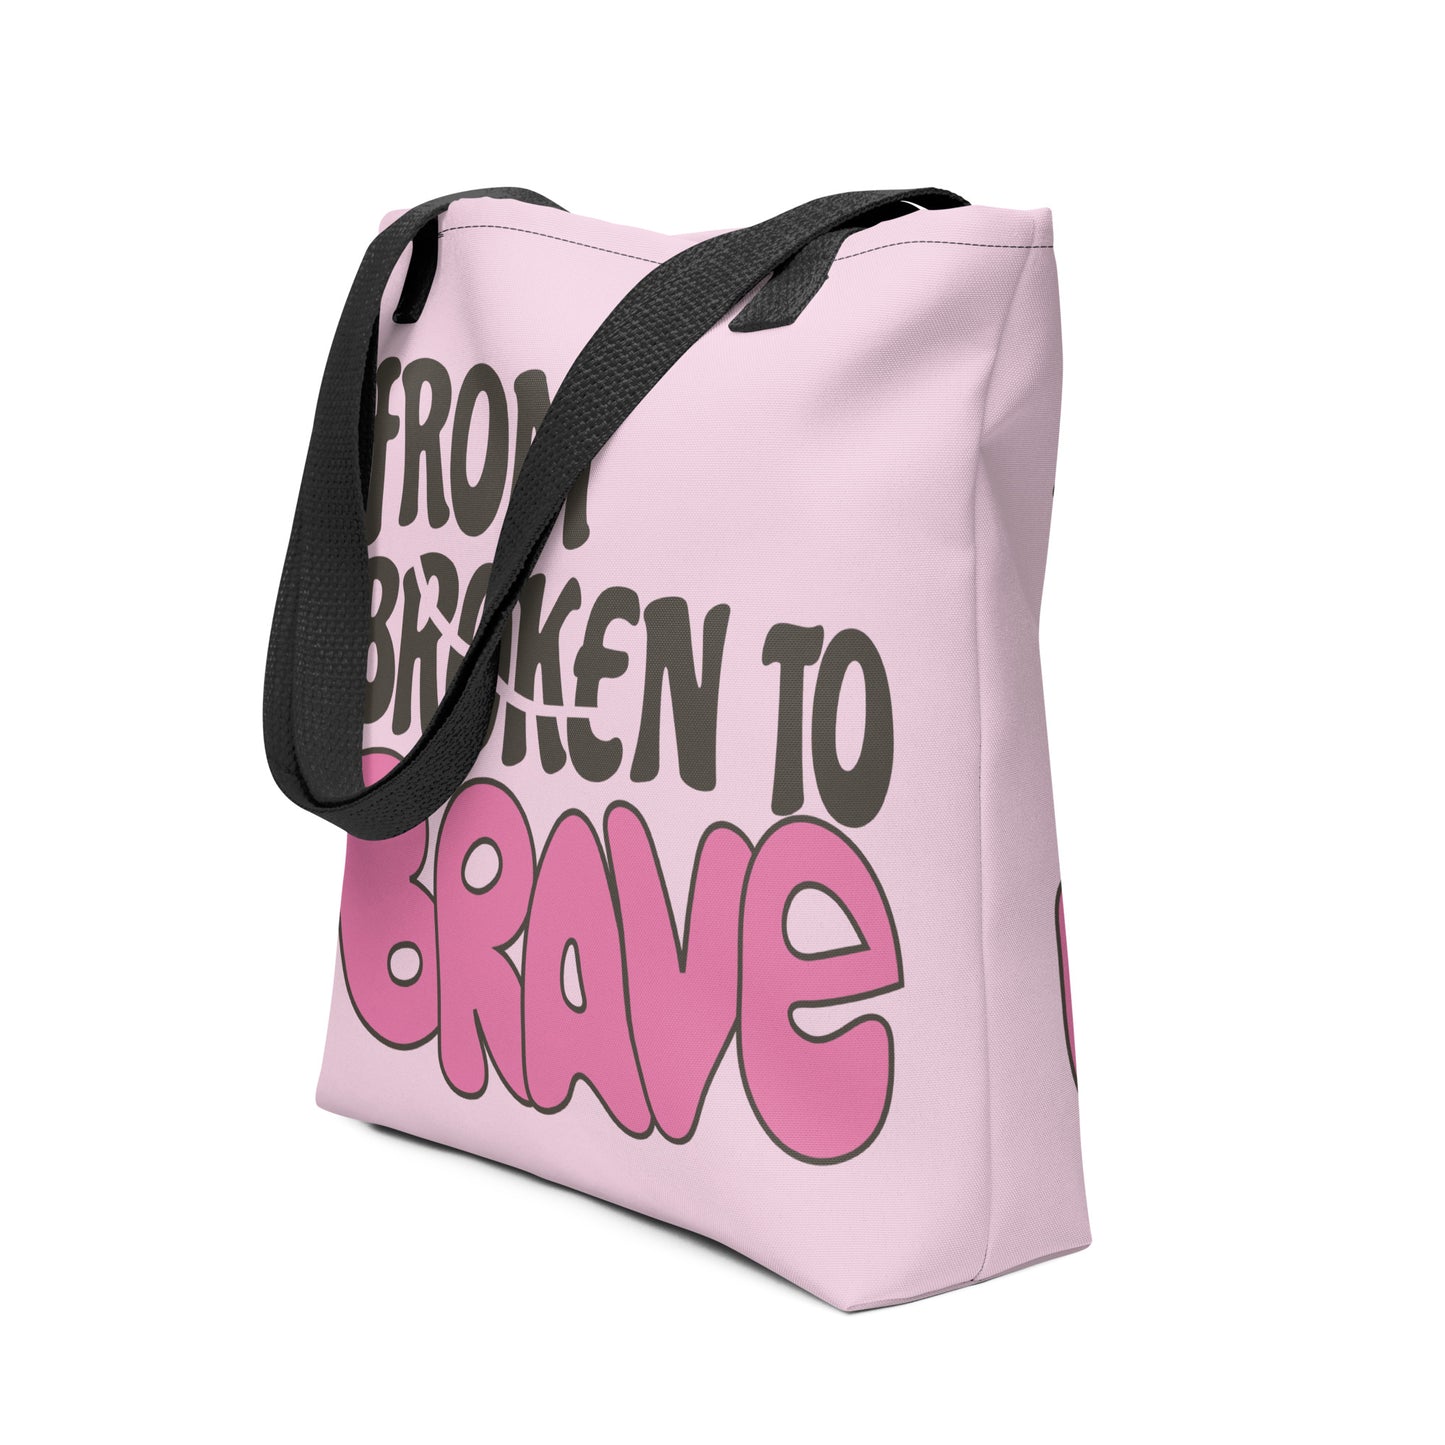 Women's tote bag, Tote bag in Fashion, Pink Tote Bag